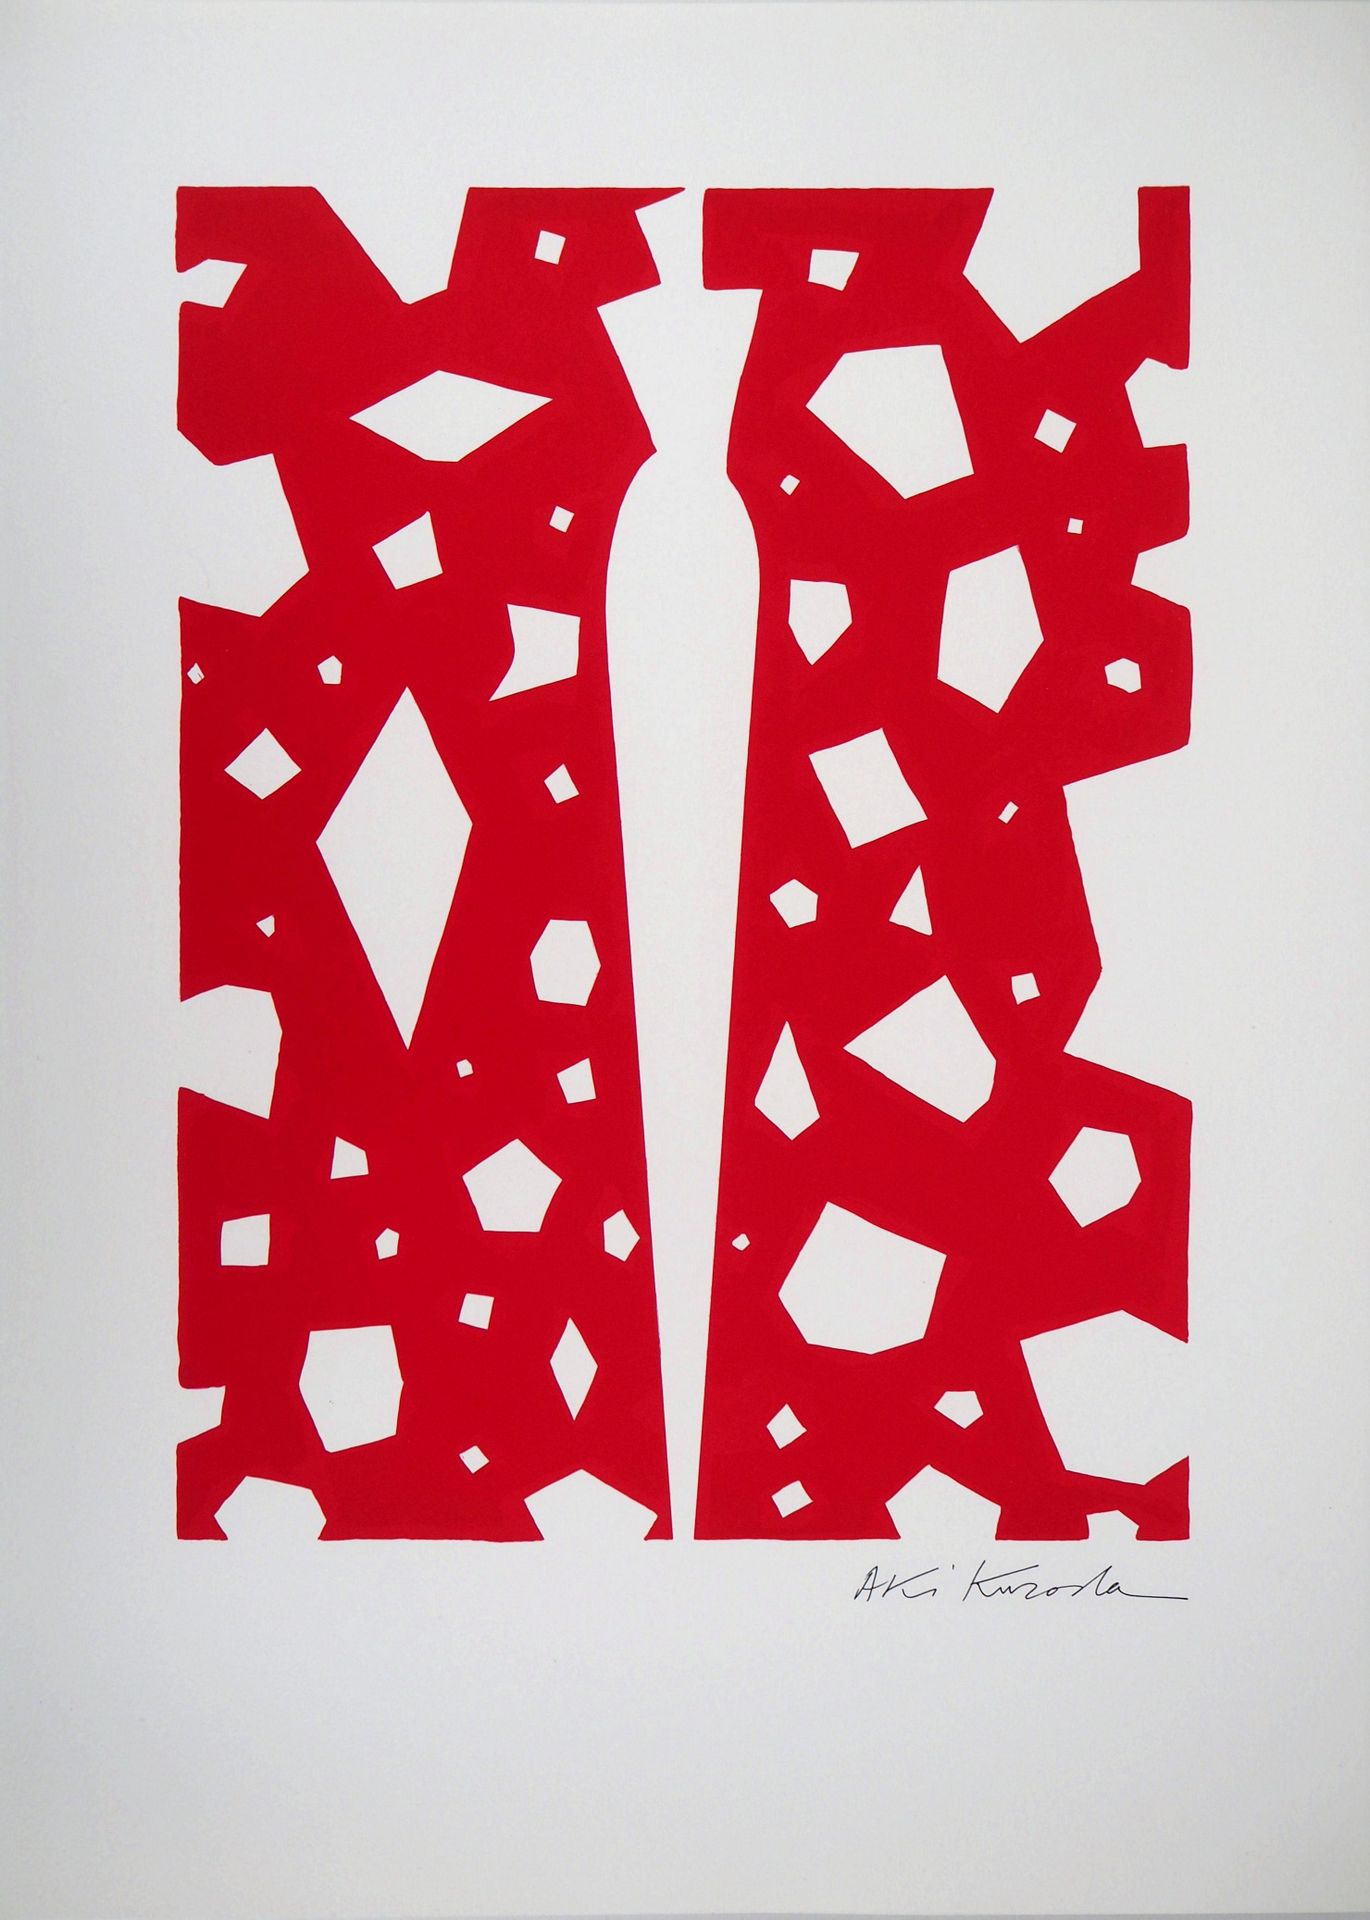 AKI KURODA Aki Kuroda

Silhouette on red background

Lithograph

Original lithog&hellip;